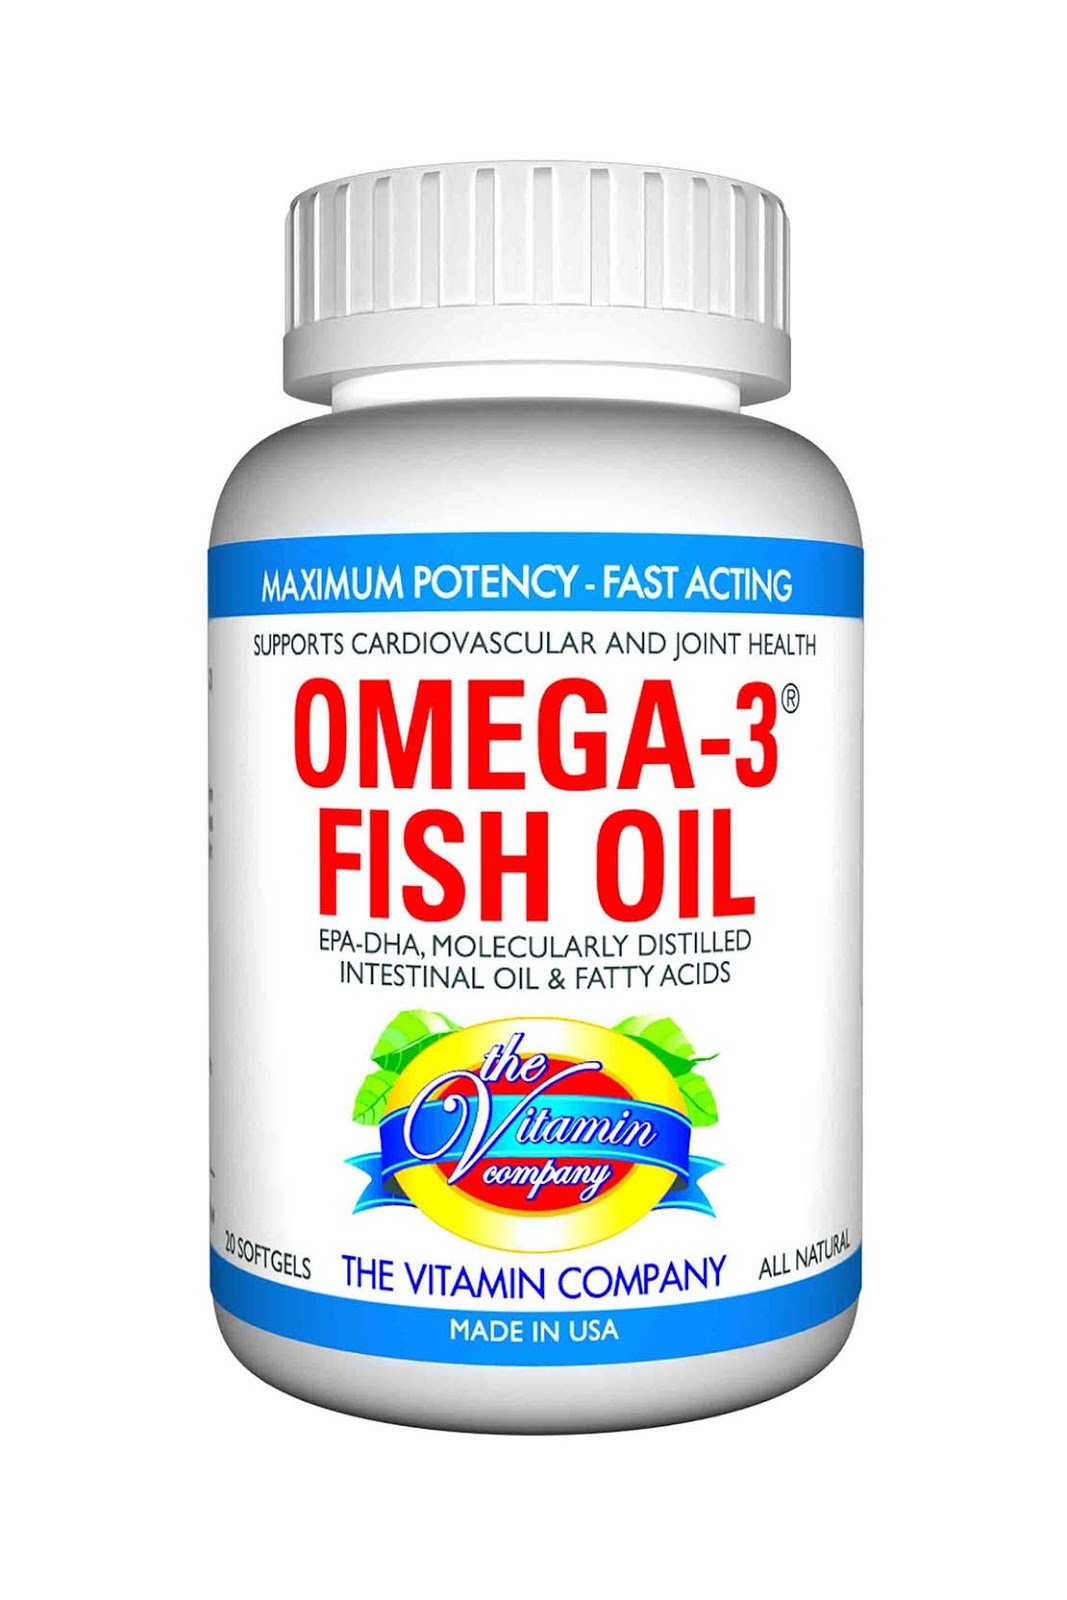 The Vitamin company: Omega 3 Fish Oil Supplements ...